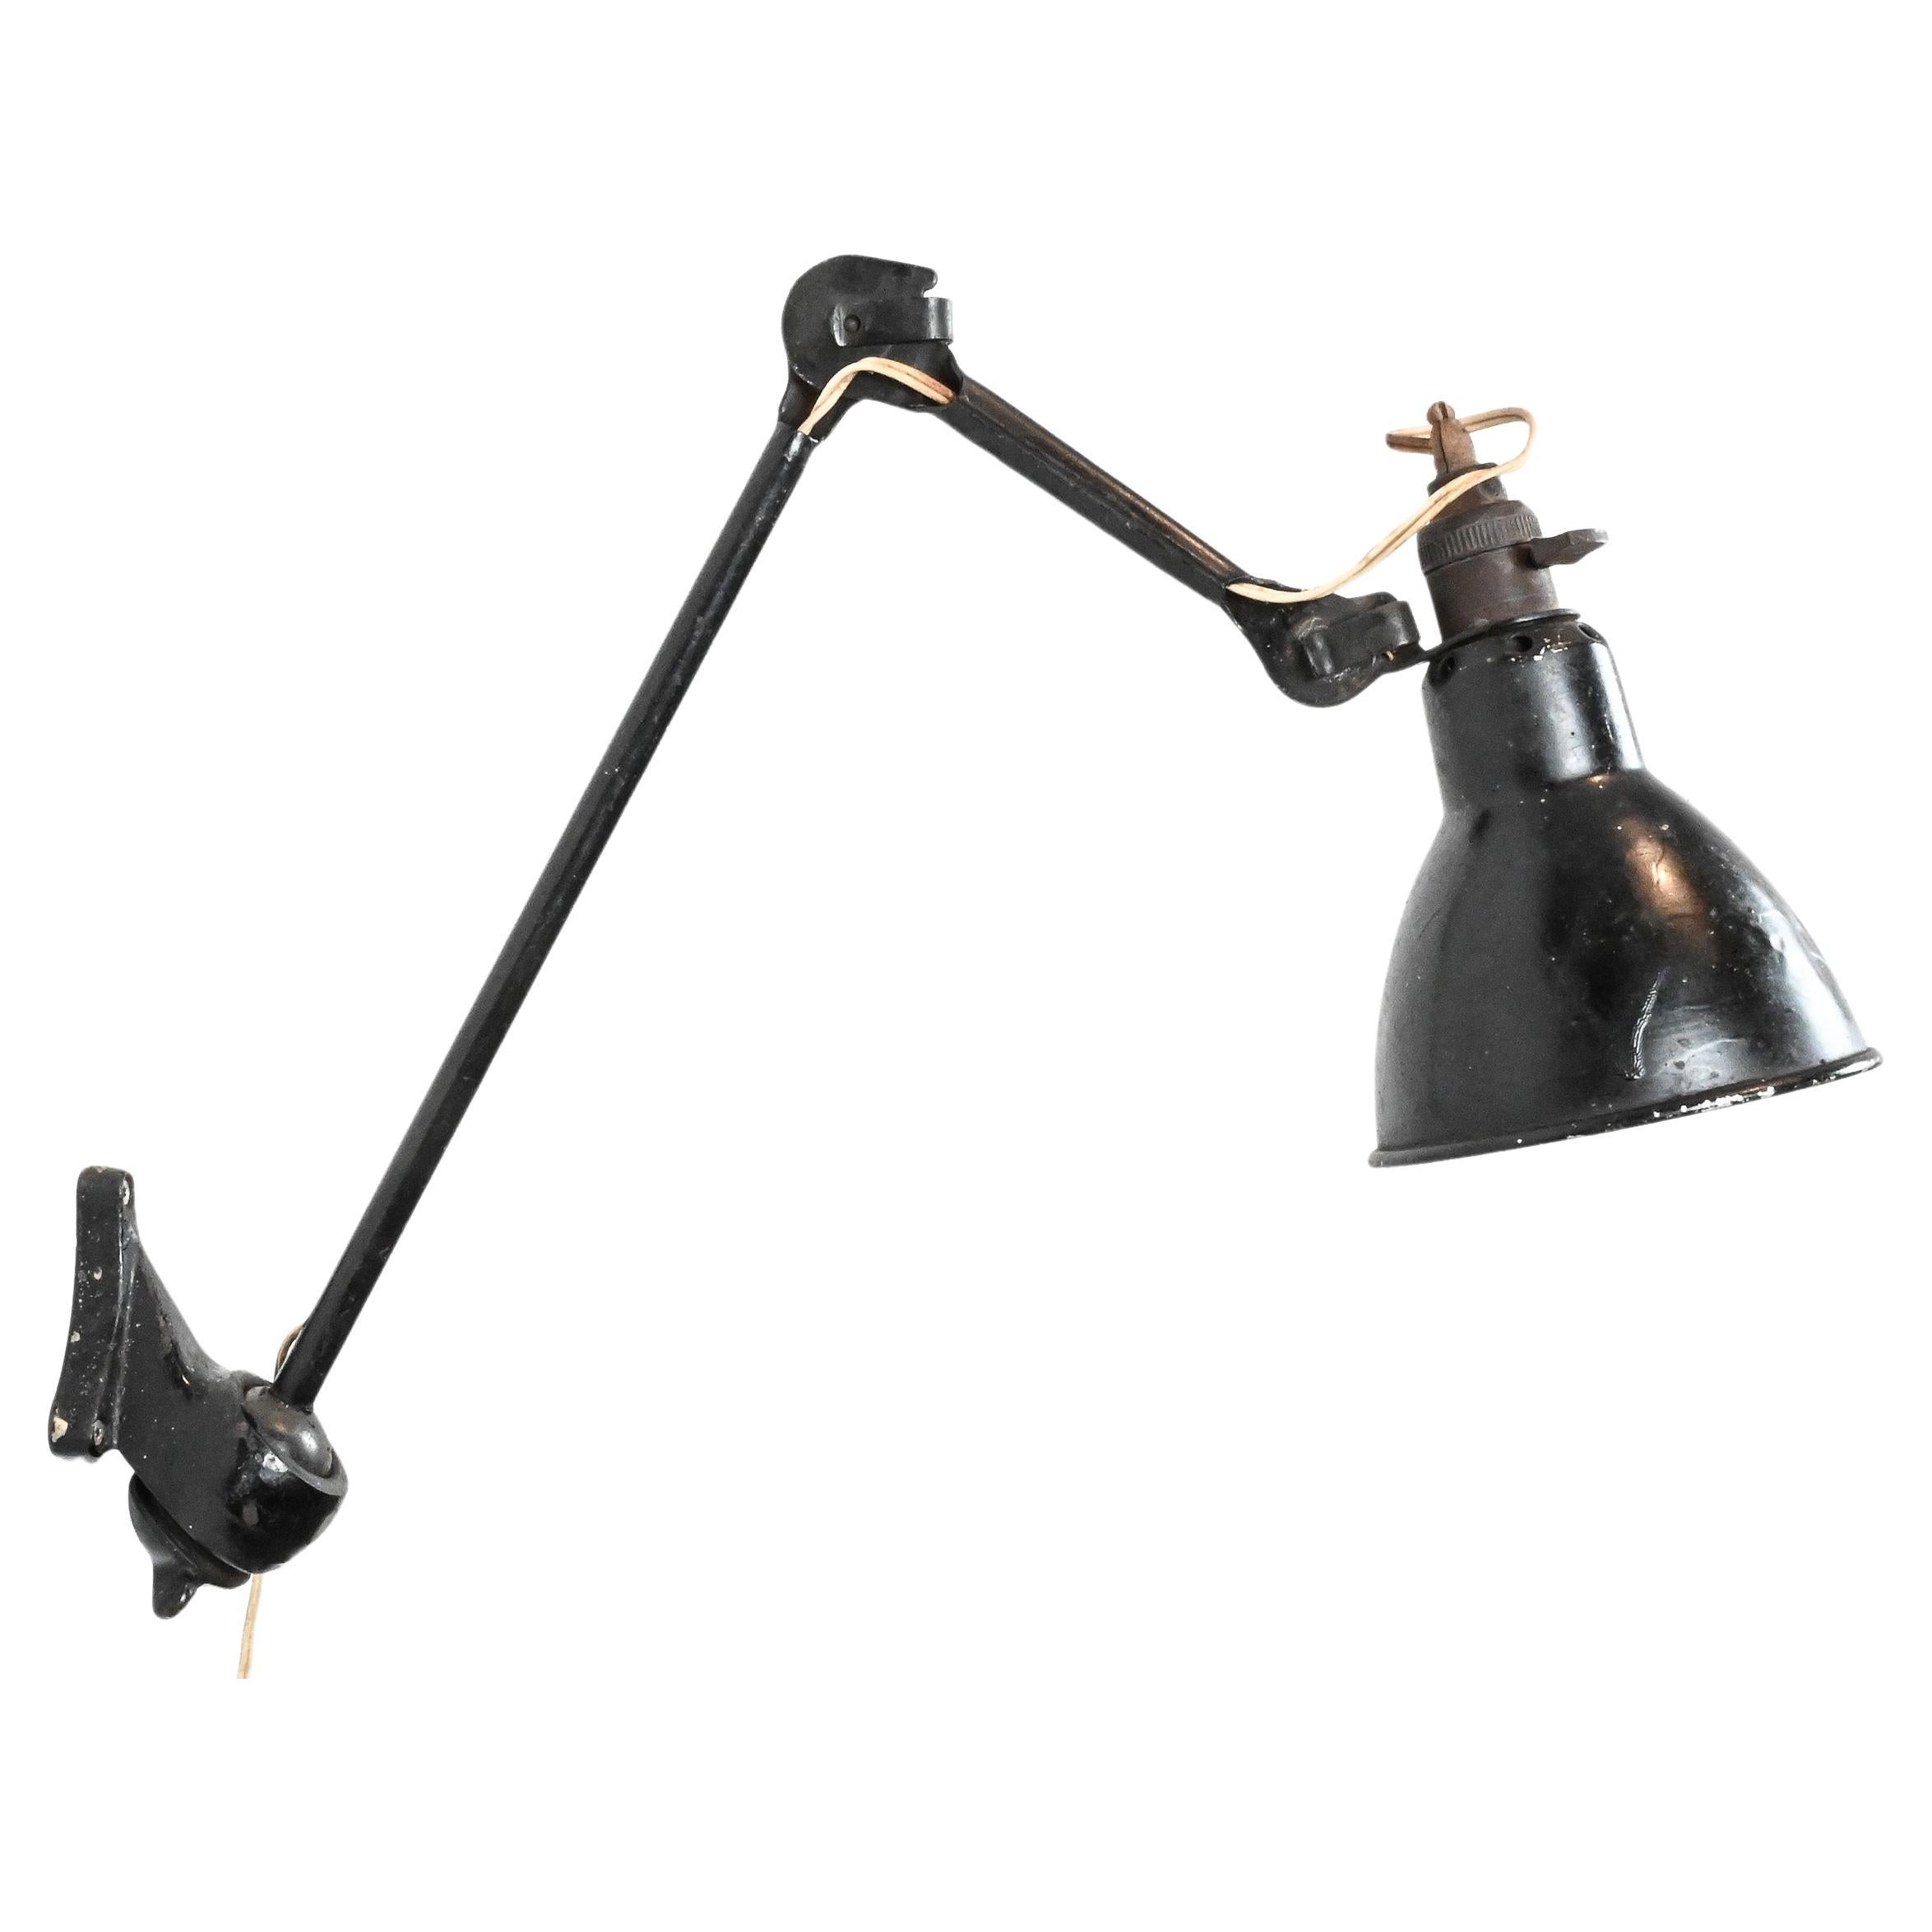 Gras Ravel 222 model adjustable wall lamp For Sale